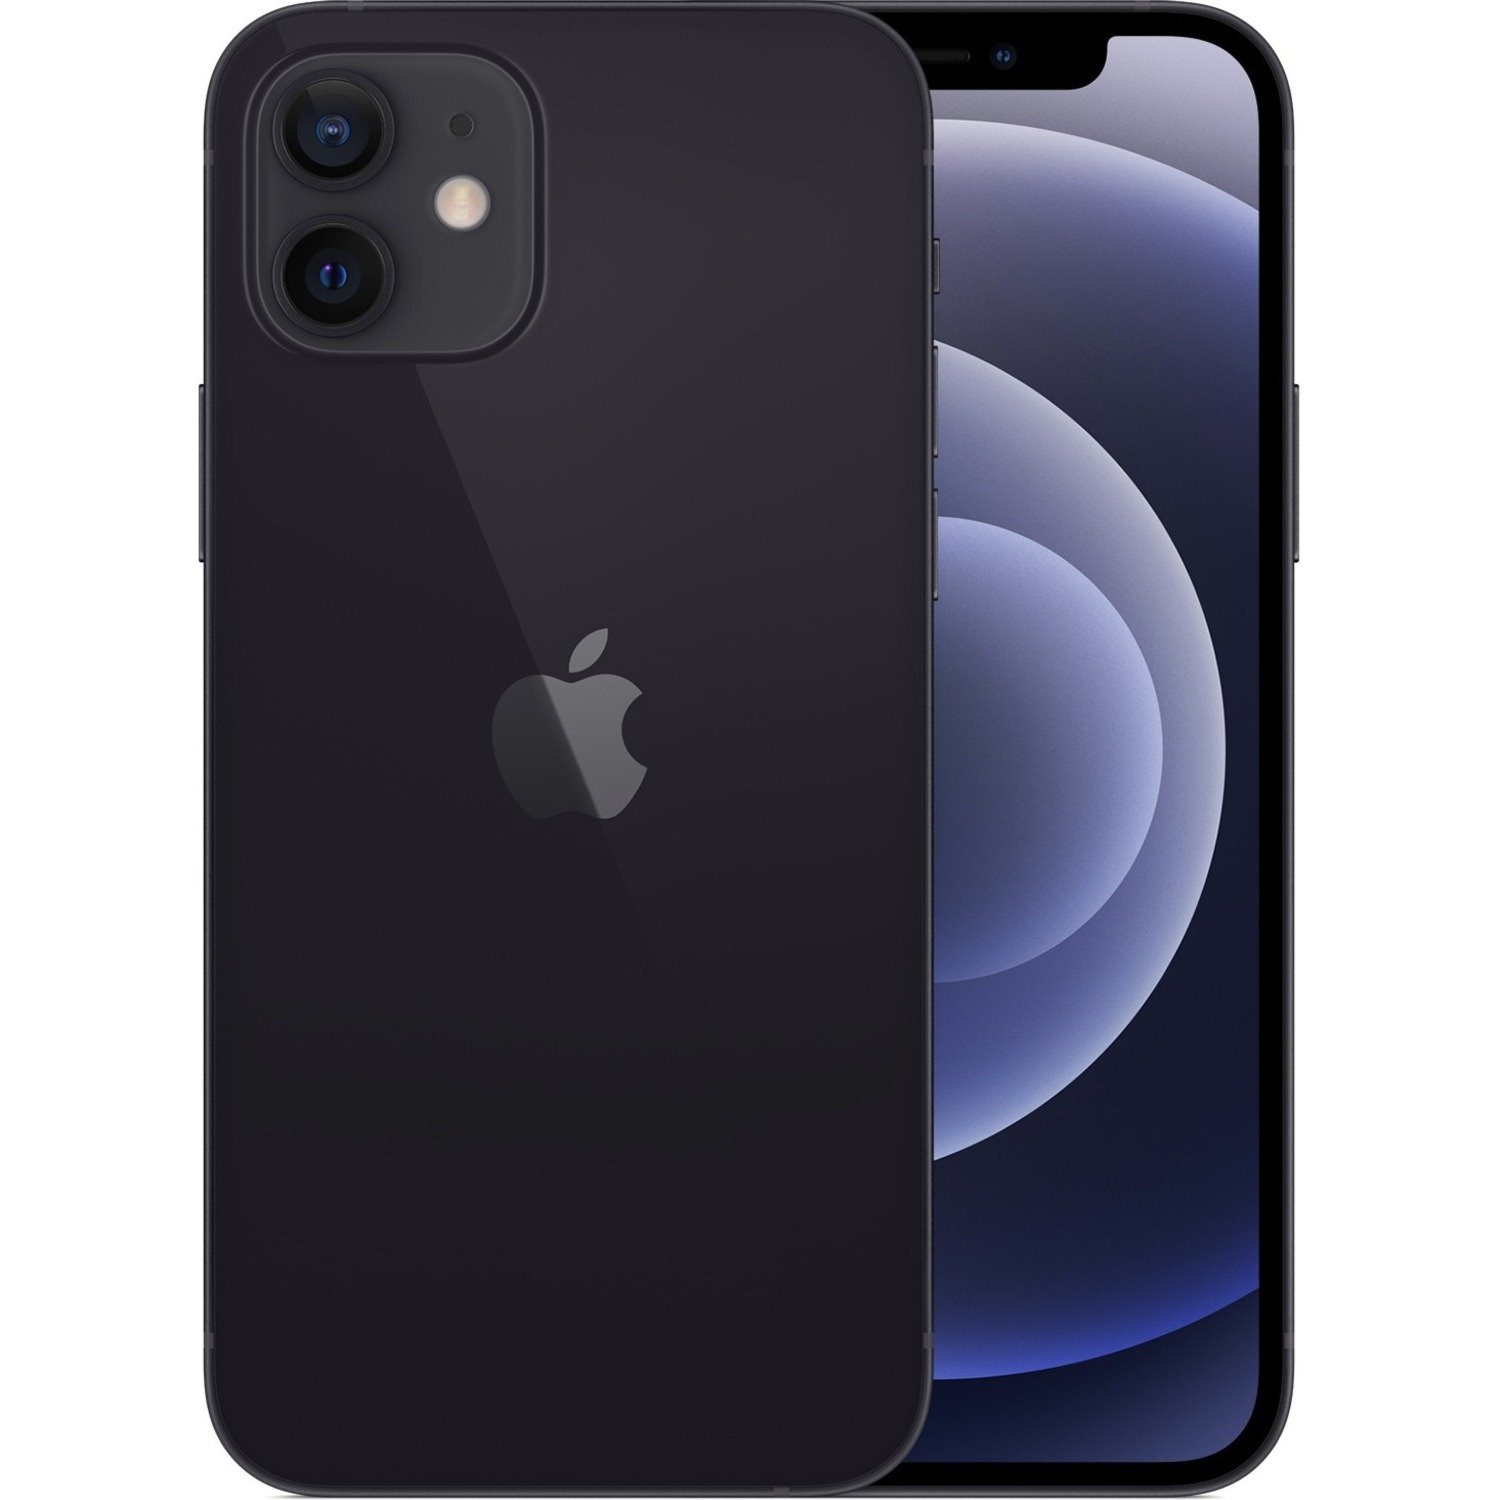 Apple Apple iPhone 12 128 GB Smartphone - 15.5 cm (6.1") OLED Full HD Plus 2532 x 1170 - Hexa-core (3.10 GHz 1.80 GHz - 4 GB RAM - iOS 14 - 5G - Black